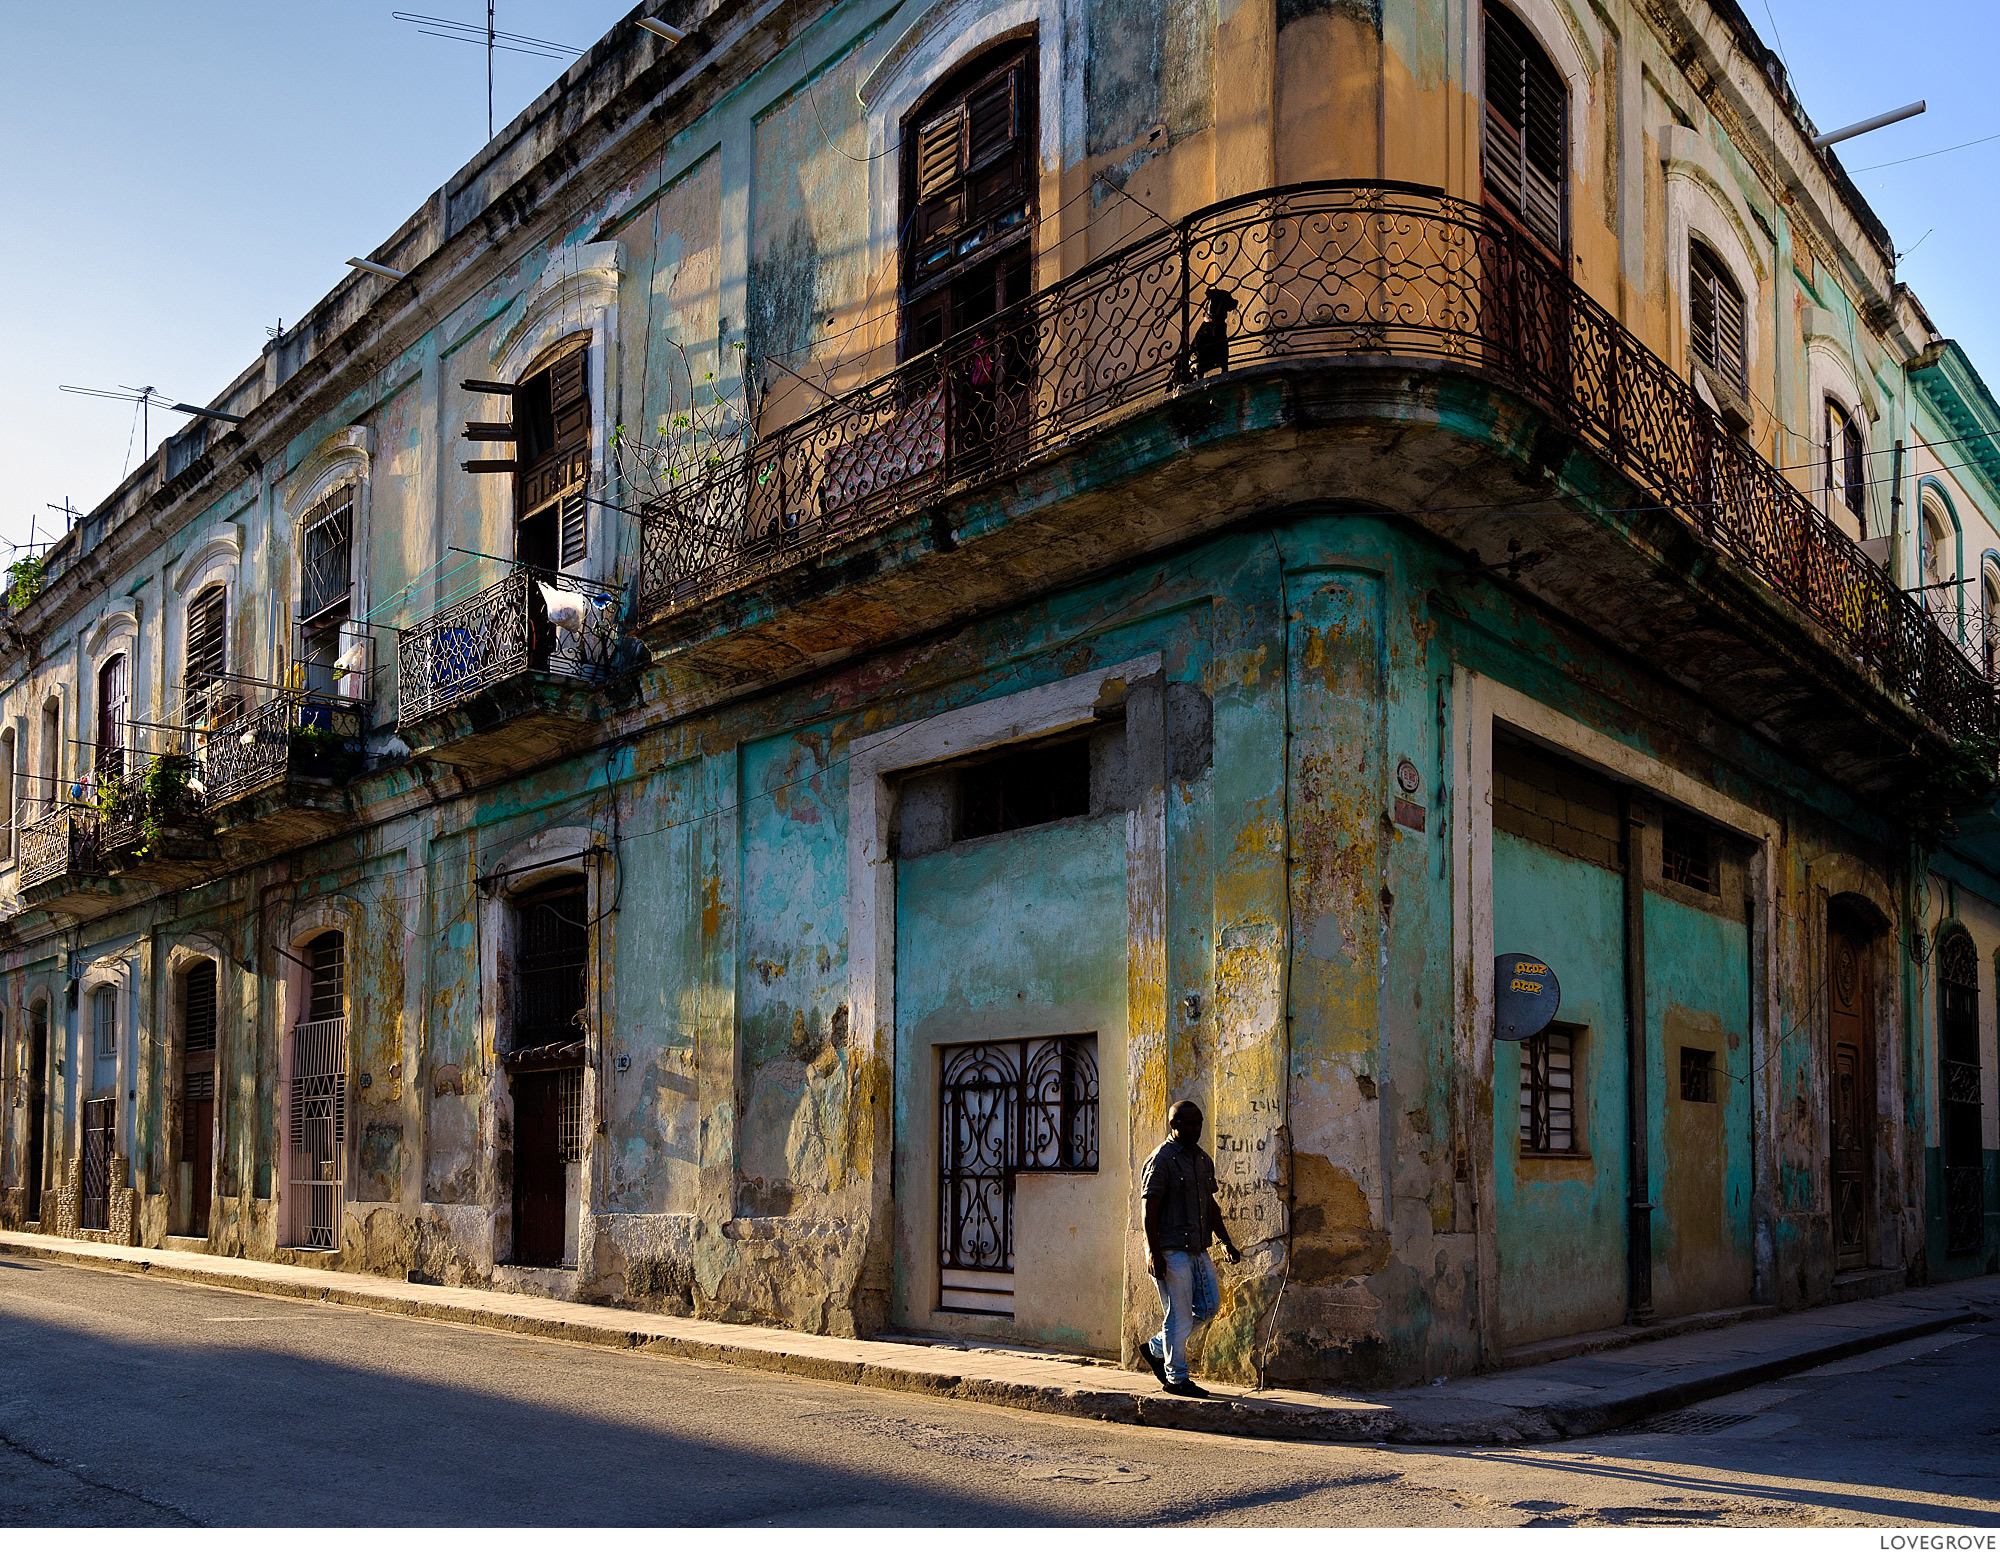 A street corner in old Havana